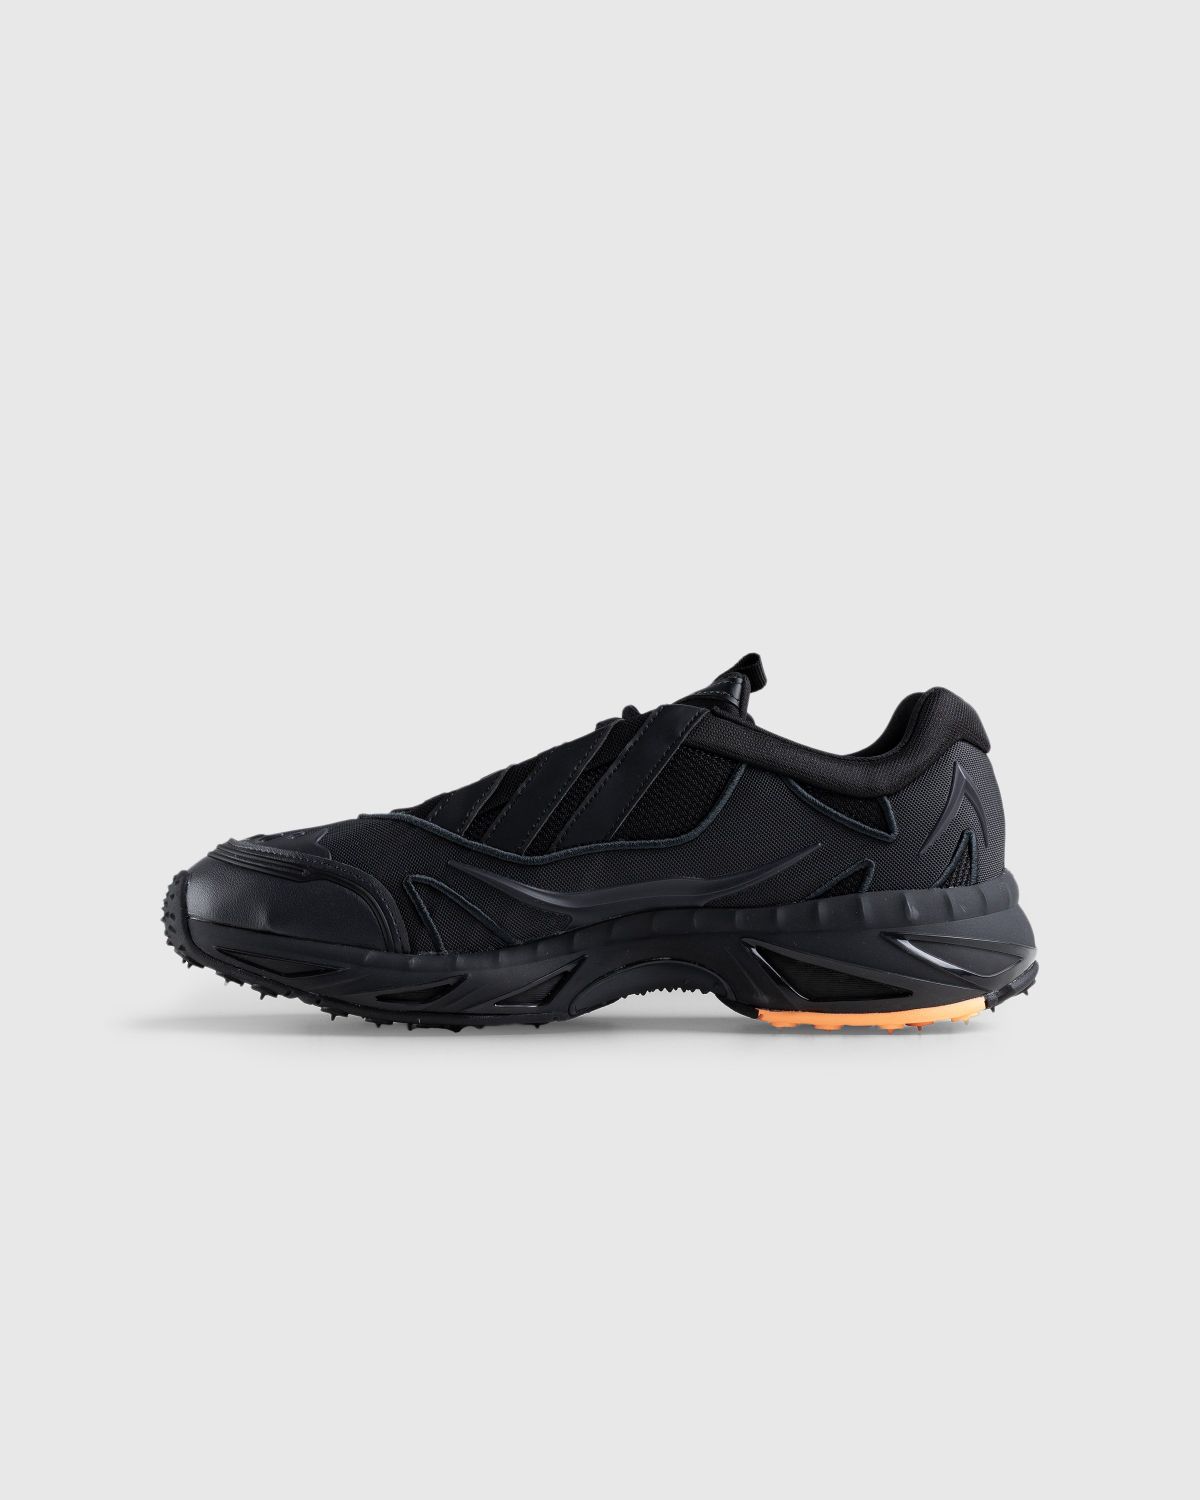 Adidas – Xare Boost Black - Low Top Sneakers - Black - Image 3